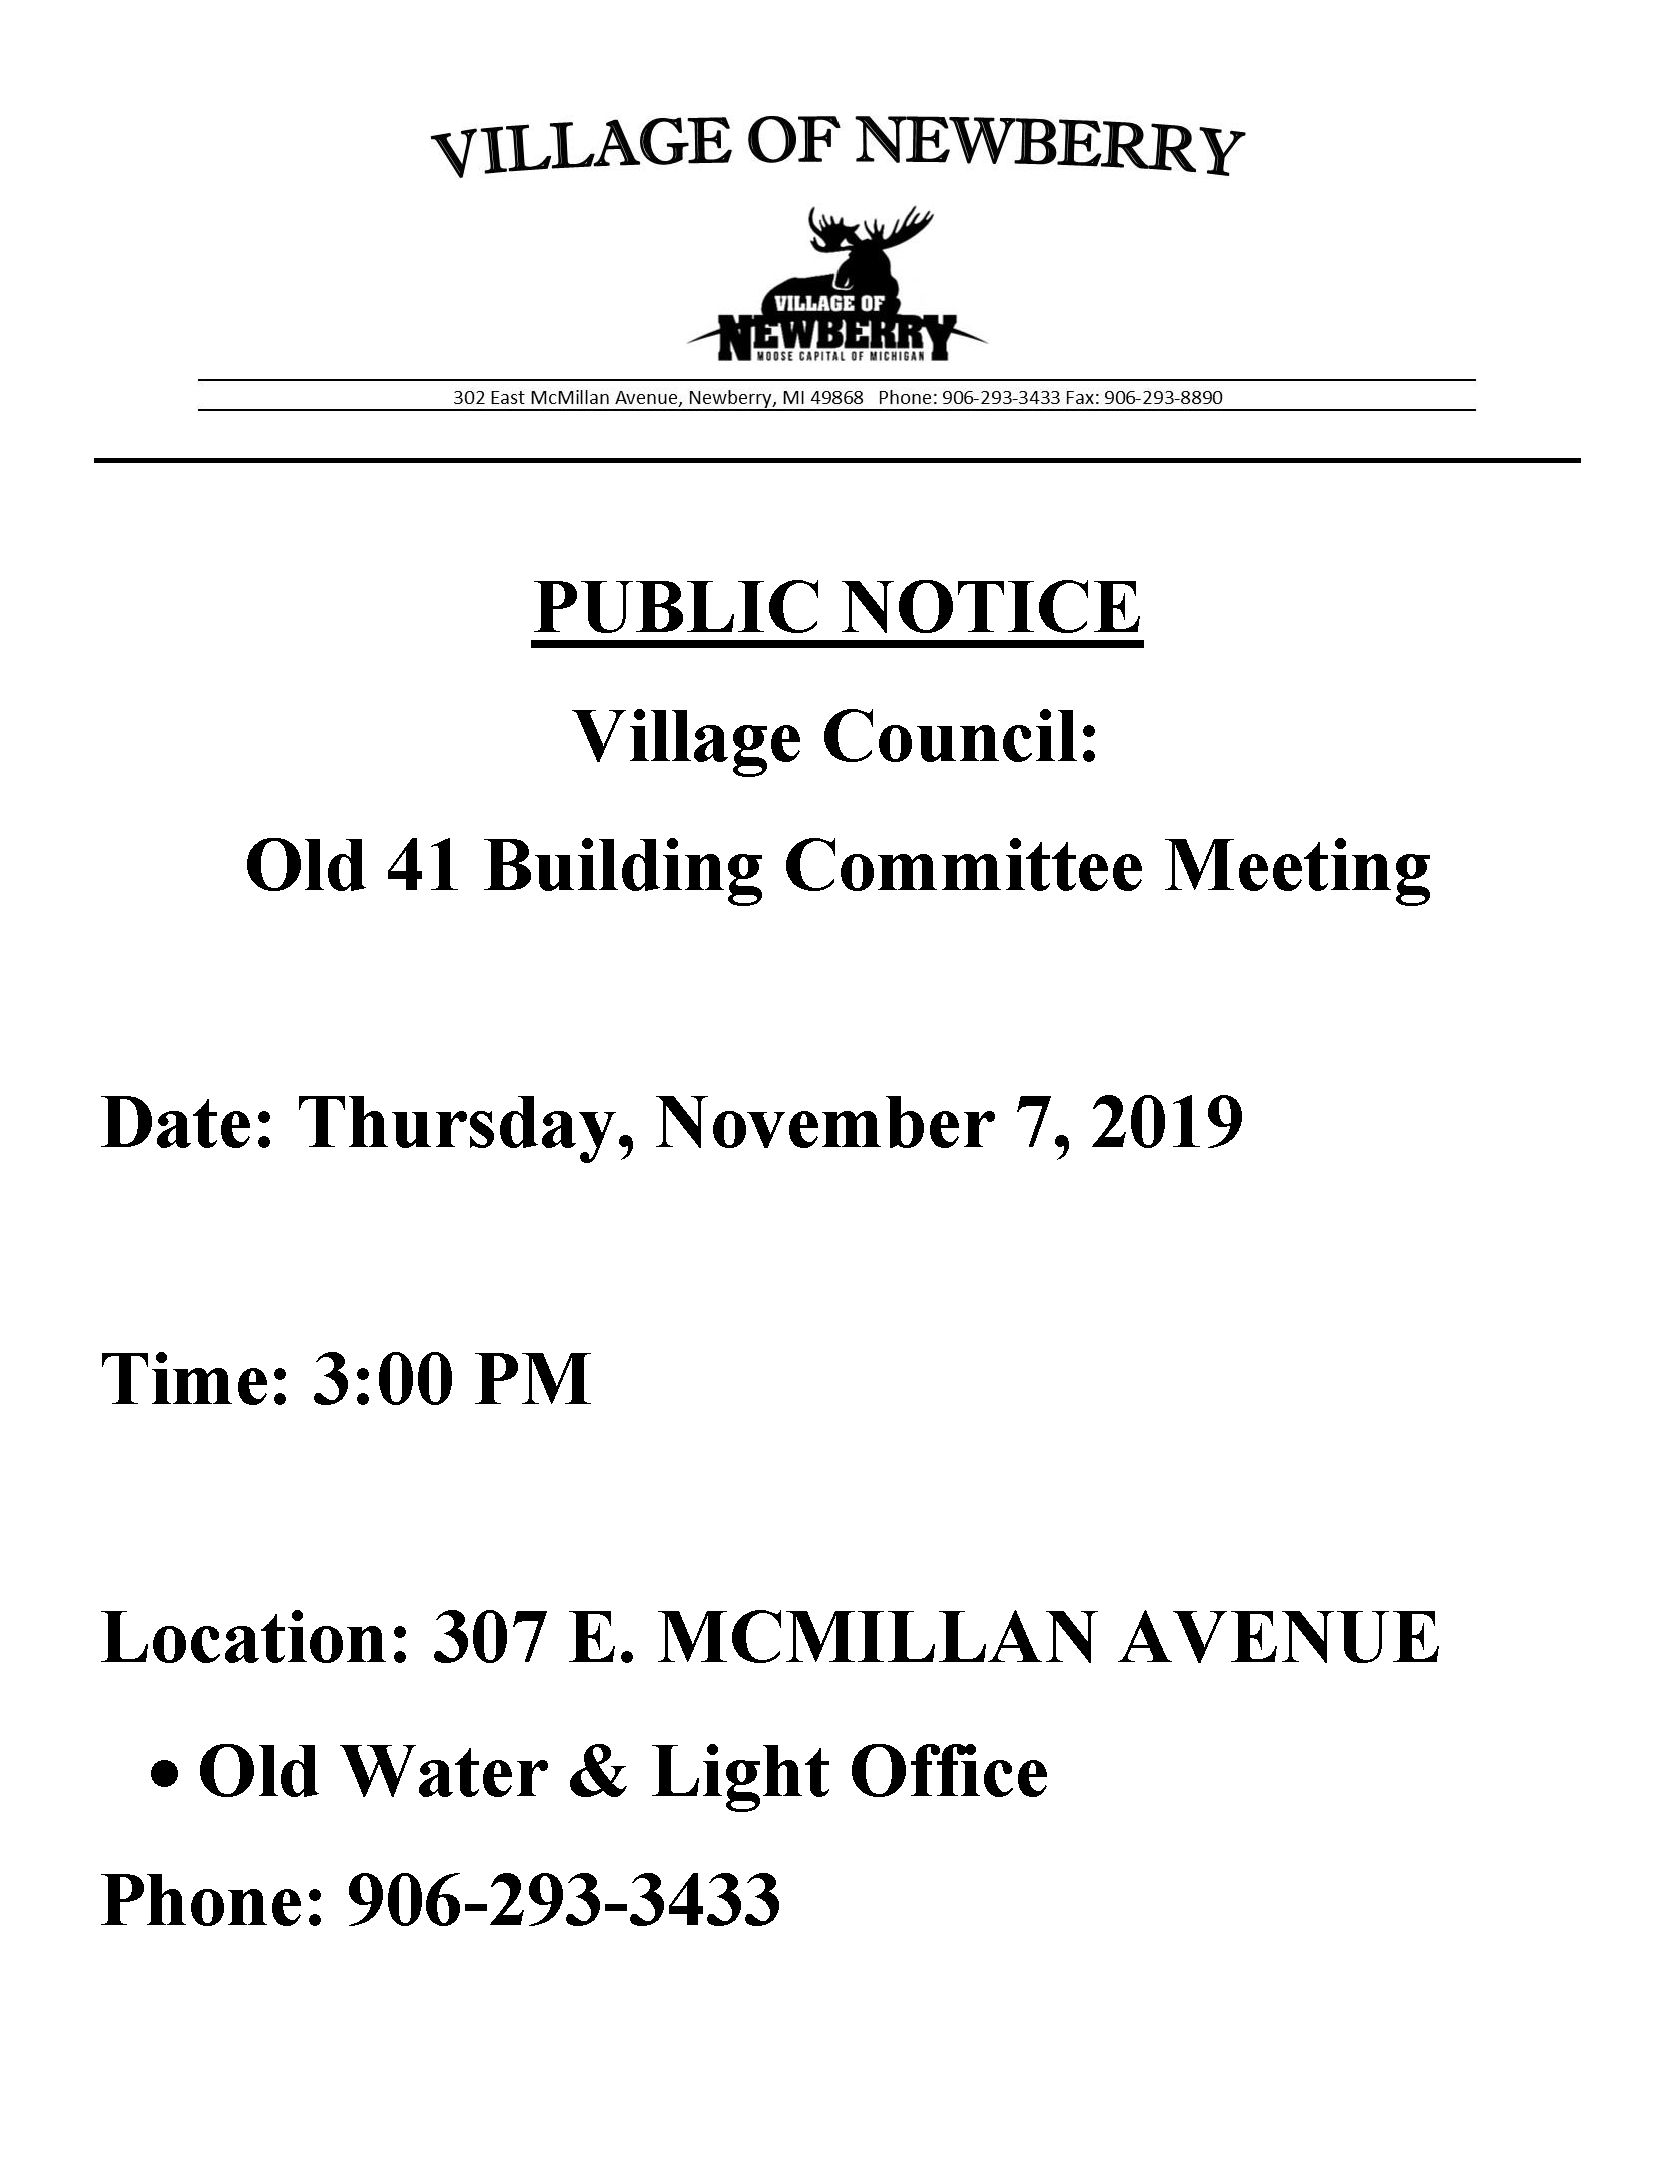 Old_41_Committee_Meeting_notice_11.05.2019